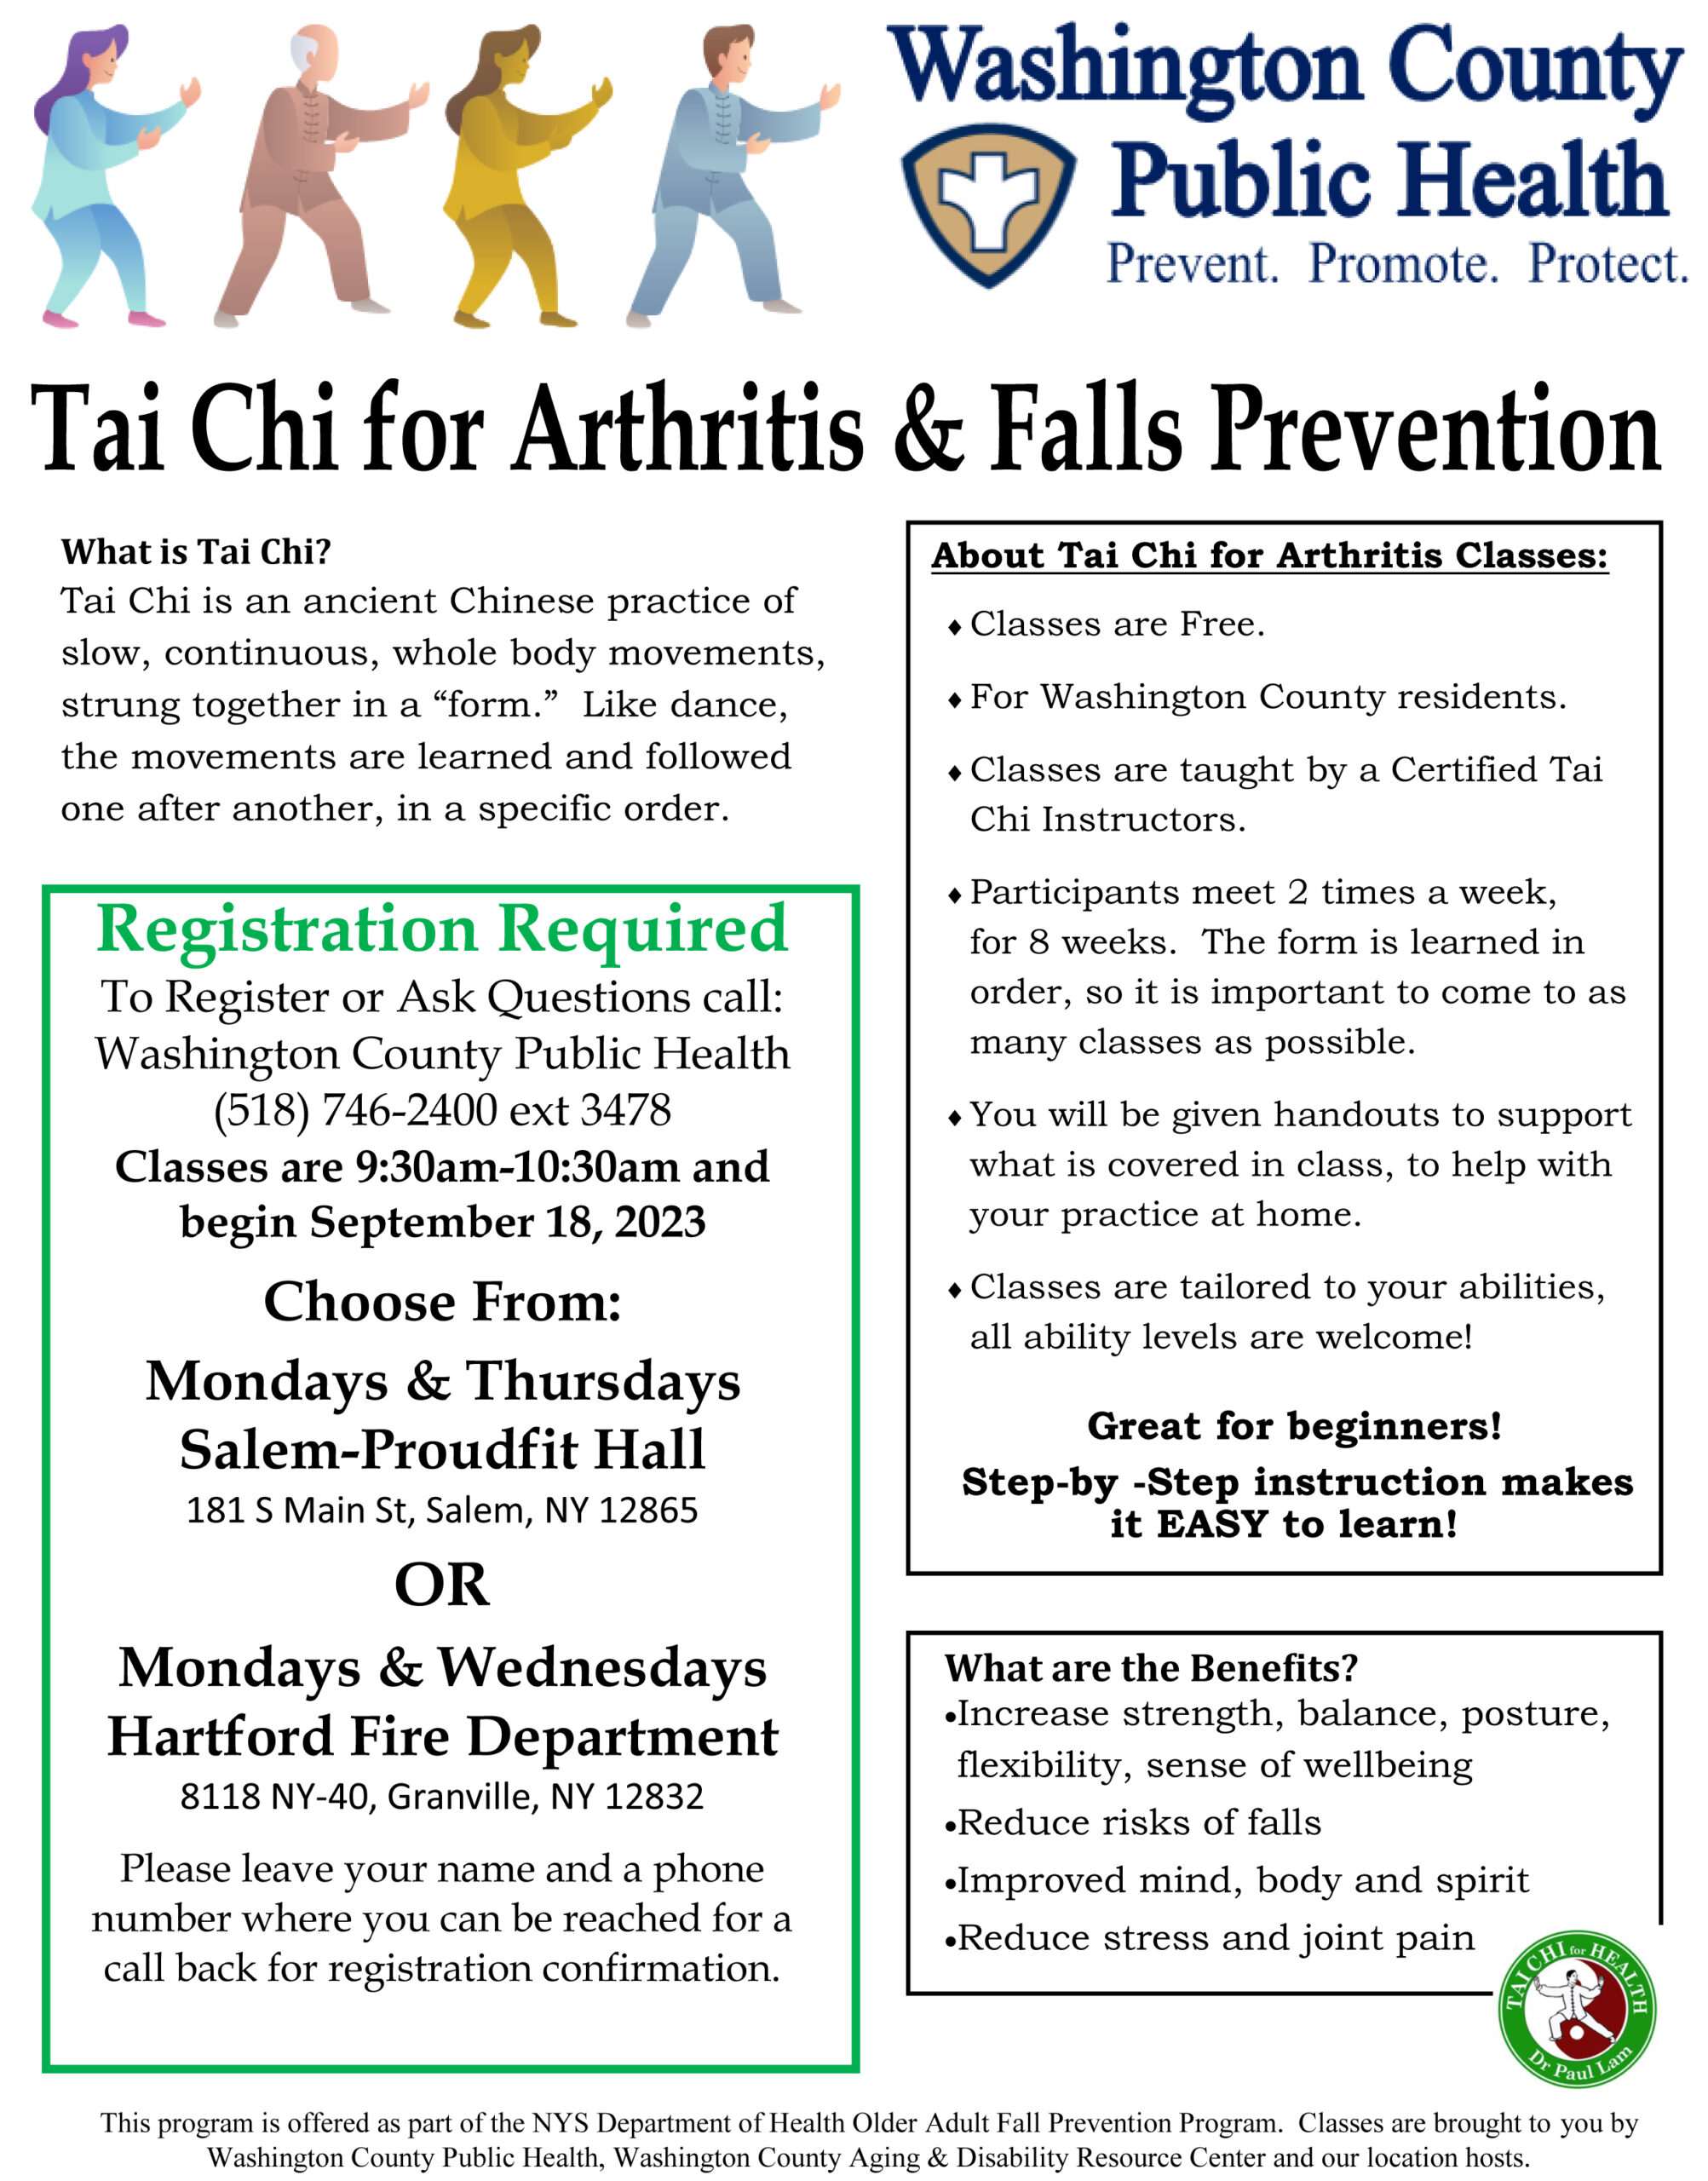 Tai Chi: Definition and History - Tai Chi Association Colorado Springs, LLC